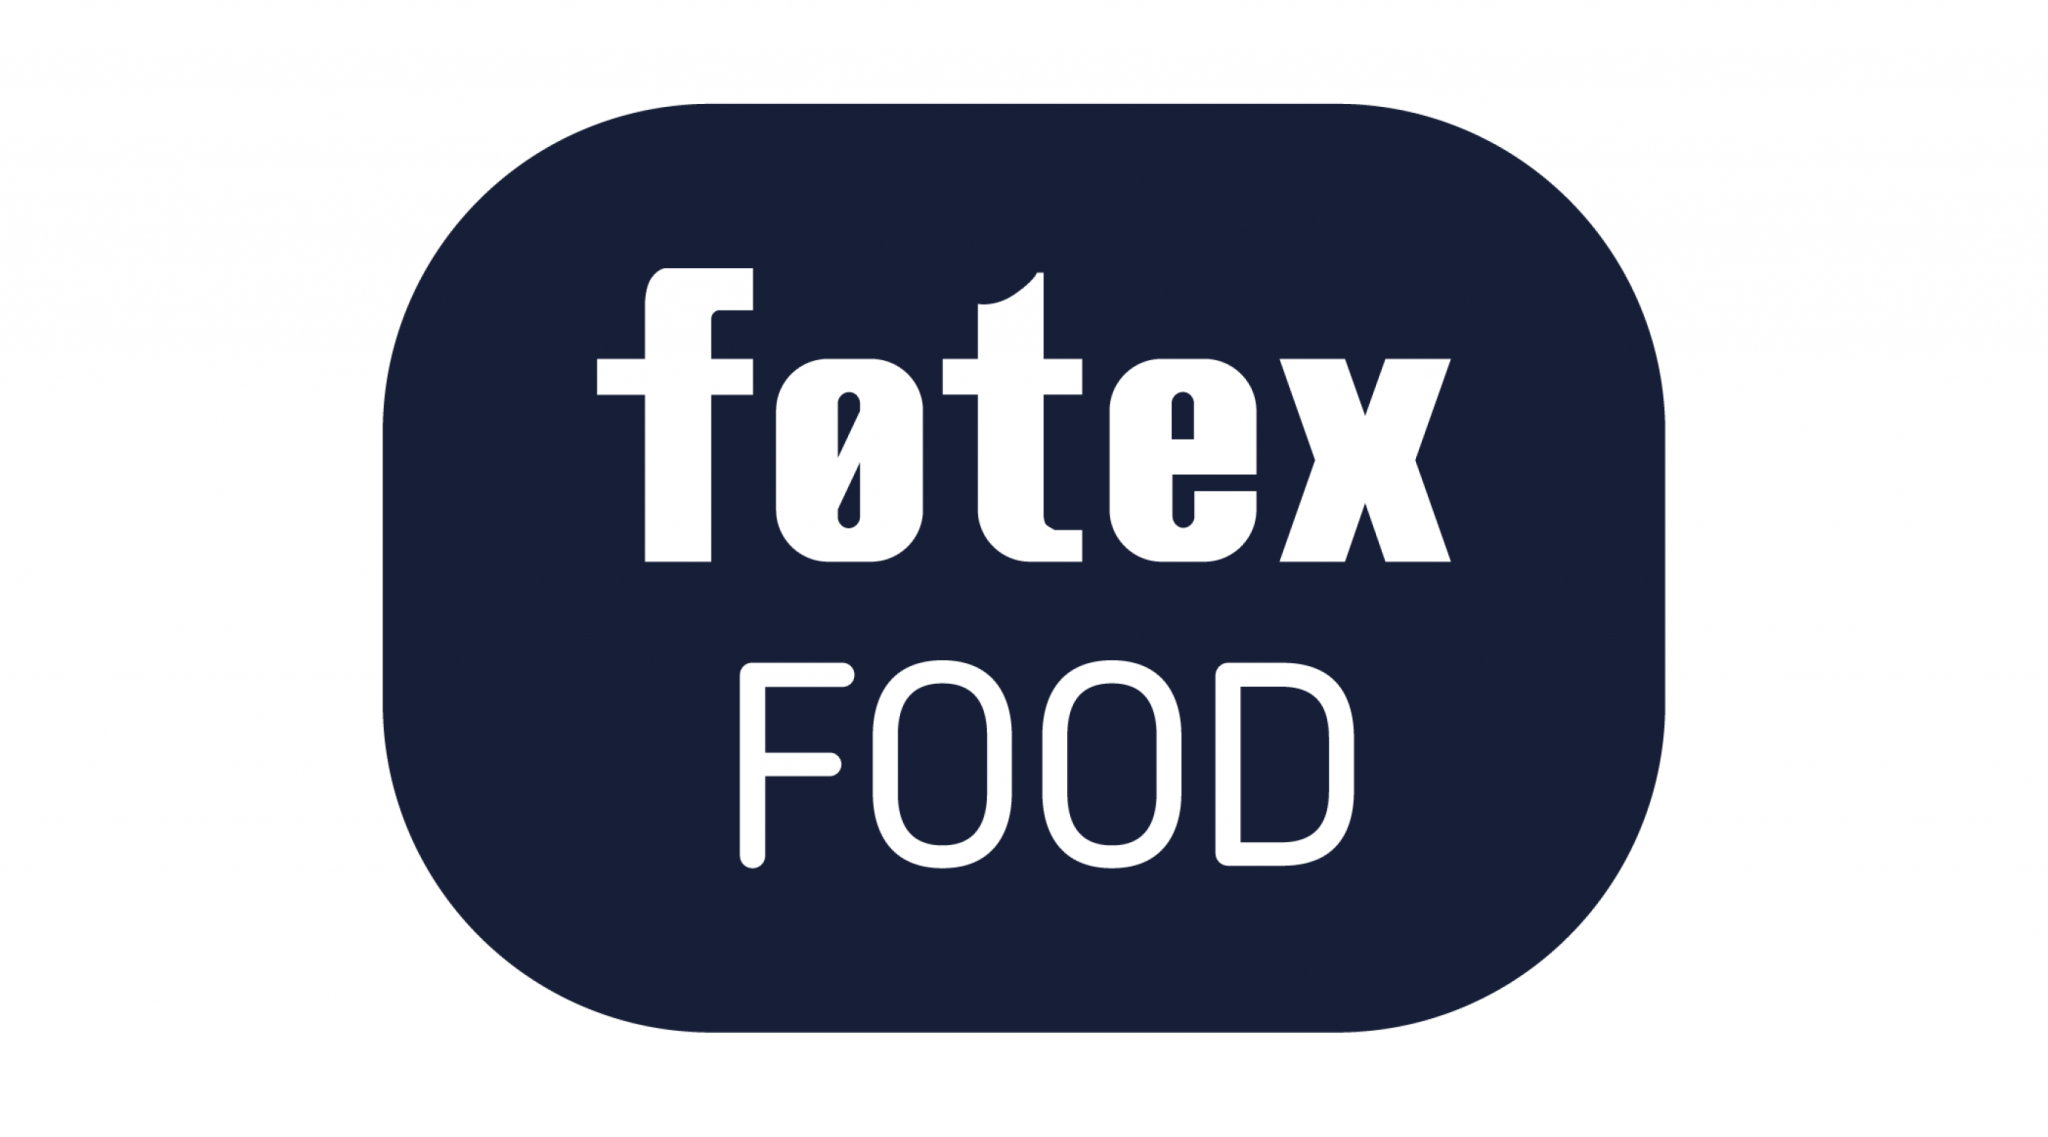 Føtex Food logo Bellakvarter - Bellakvarter